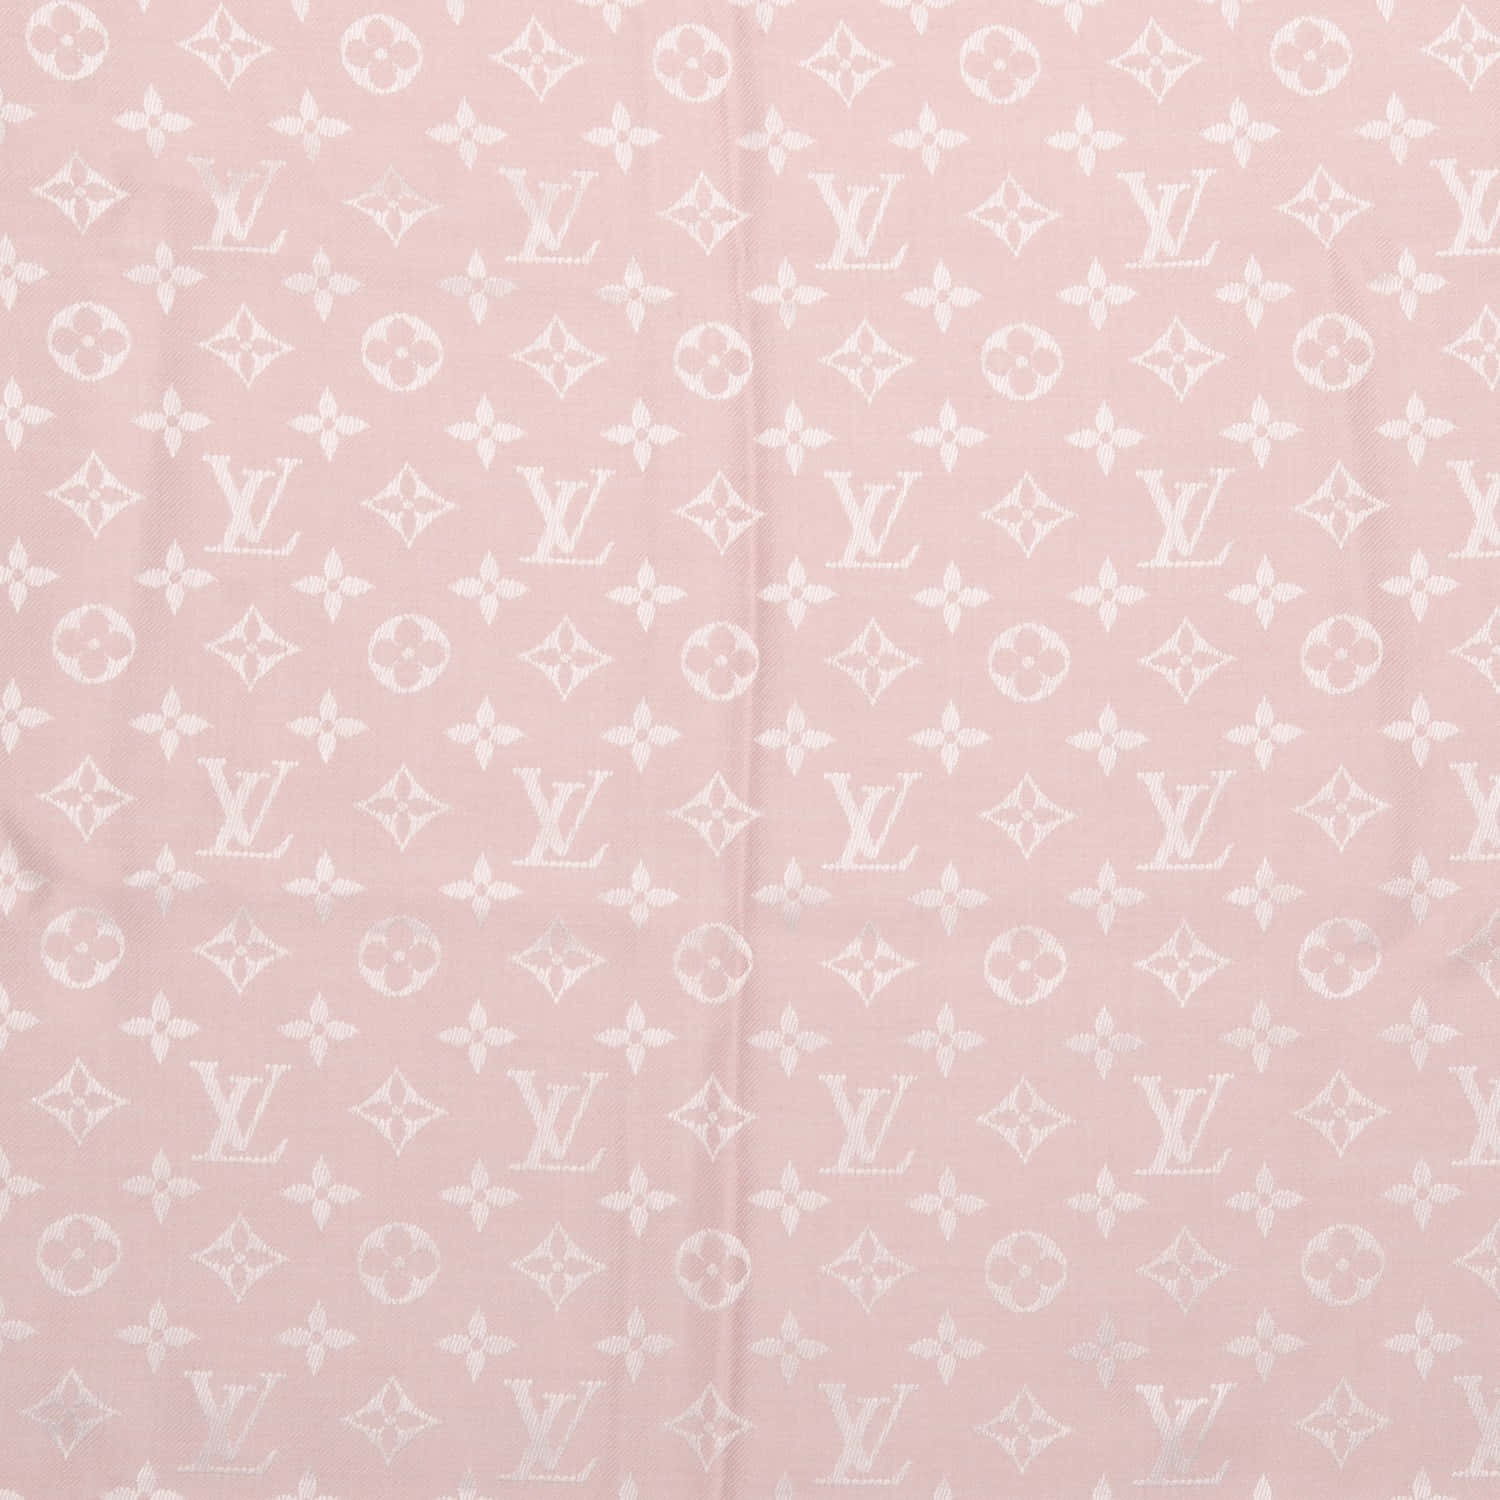 Daiun'occhiata A Questa Elegante E Alla Moda Borsa Louis Vuitton Con Stampa Monogramma Rosa. Sfondo